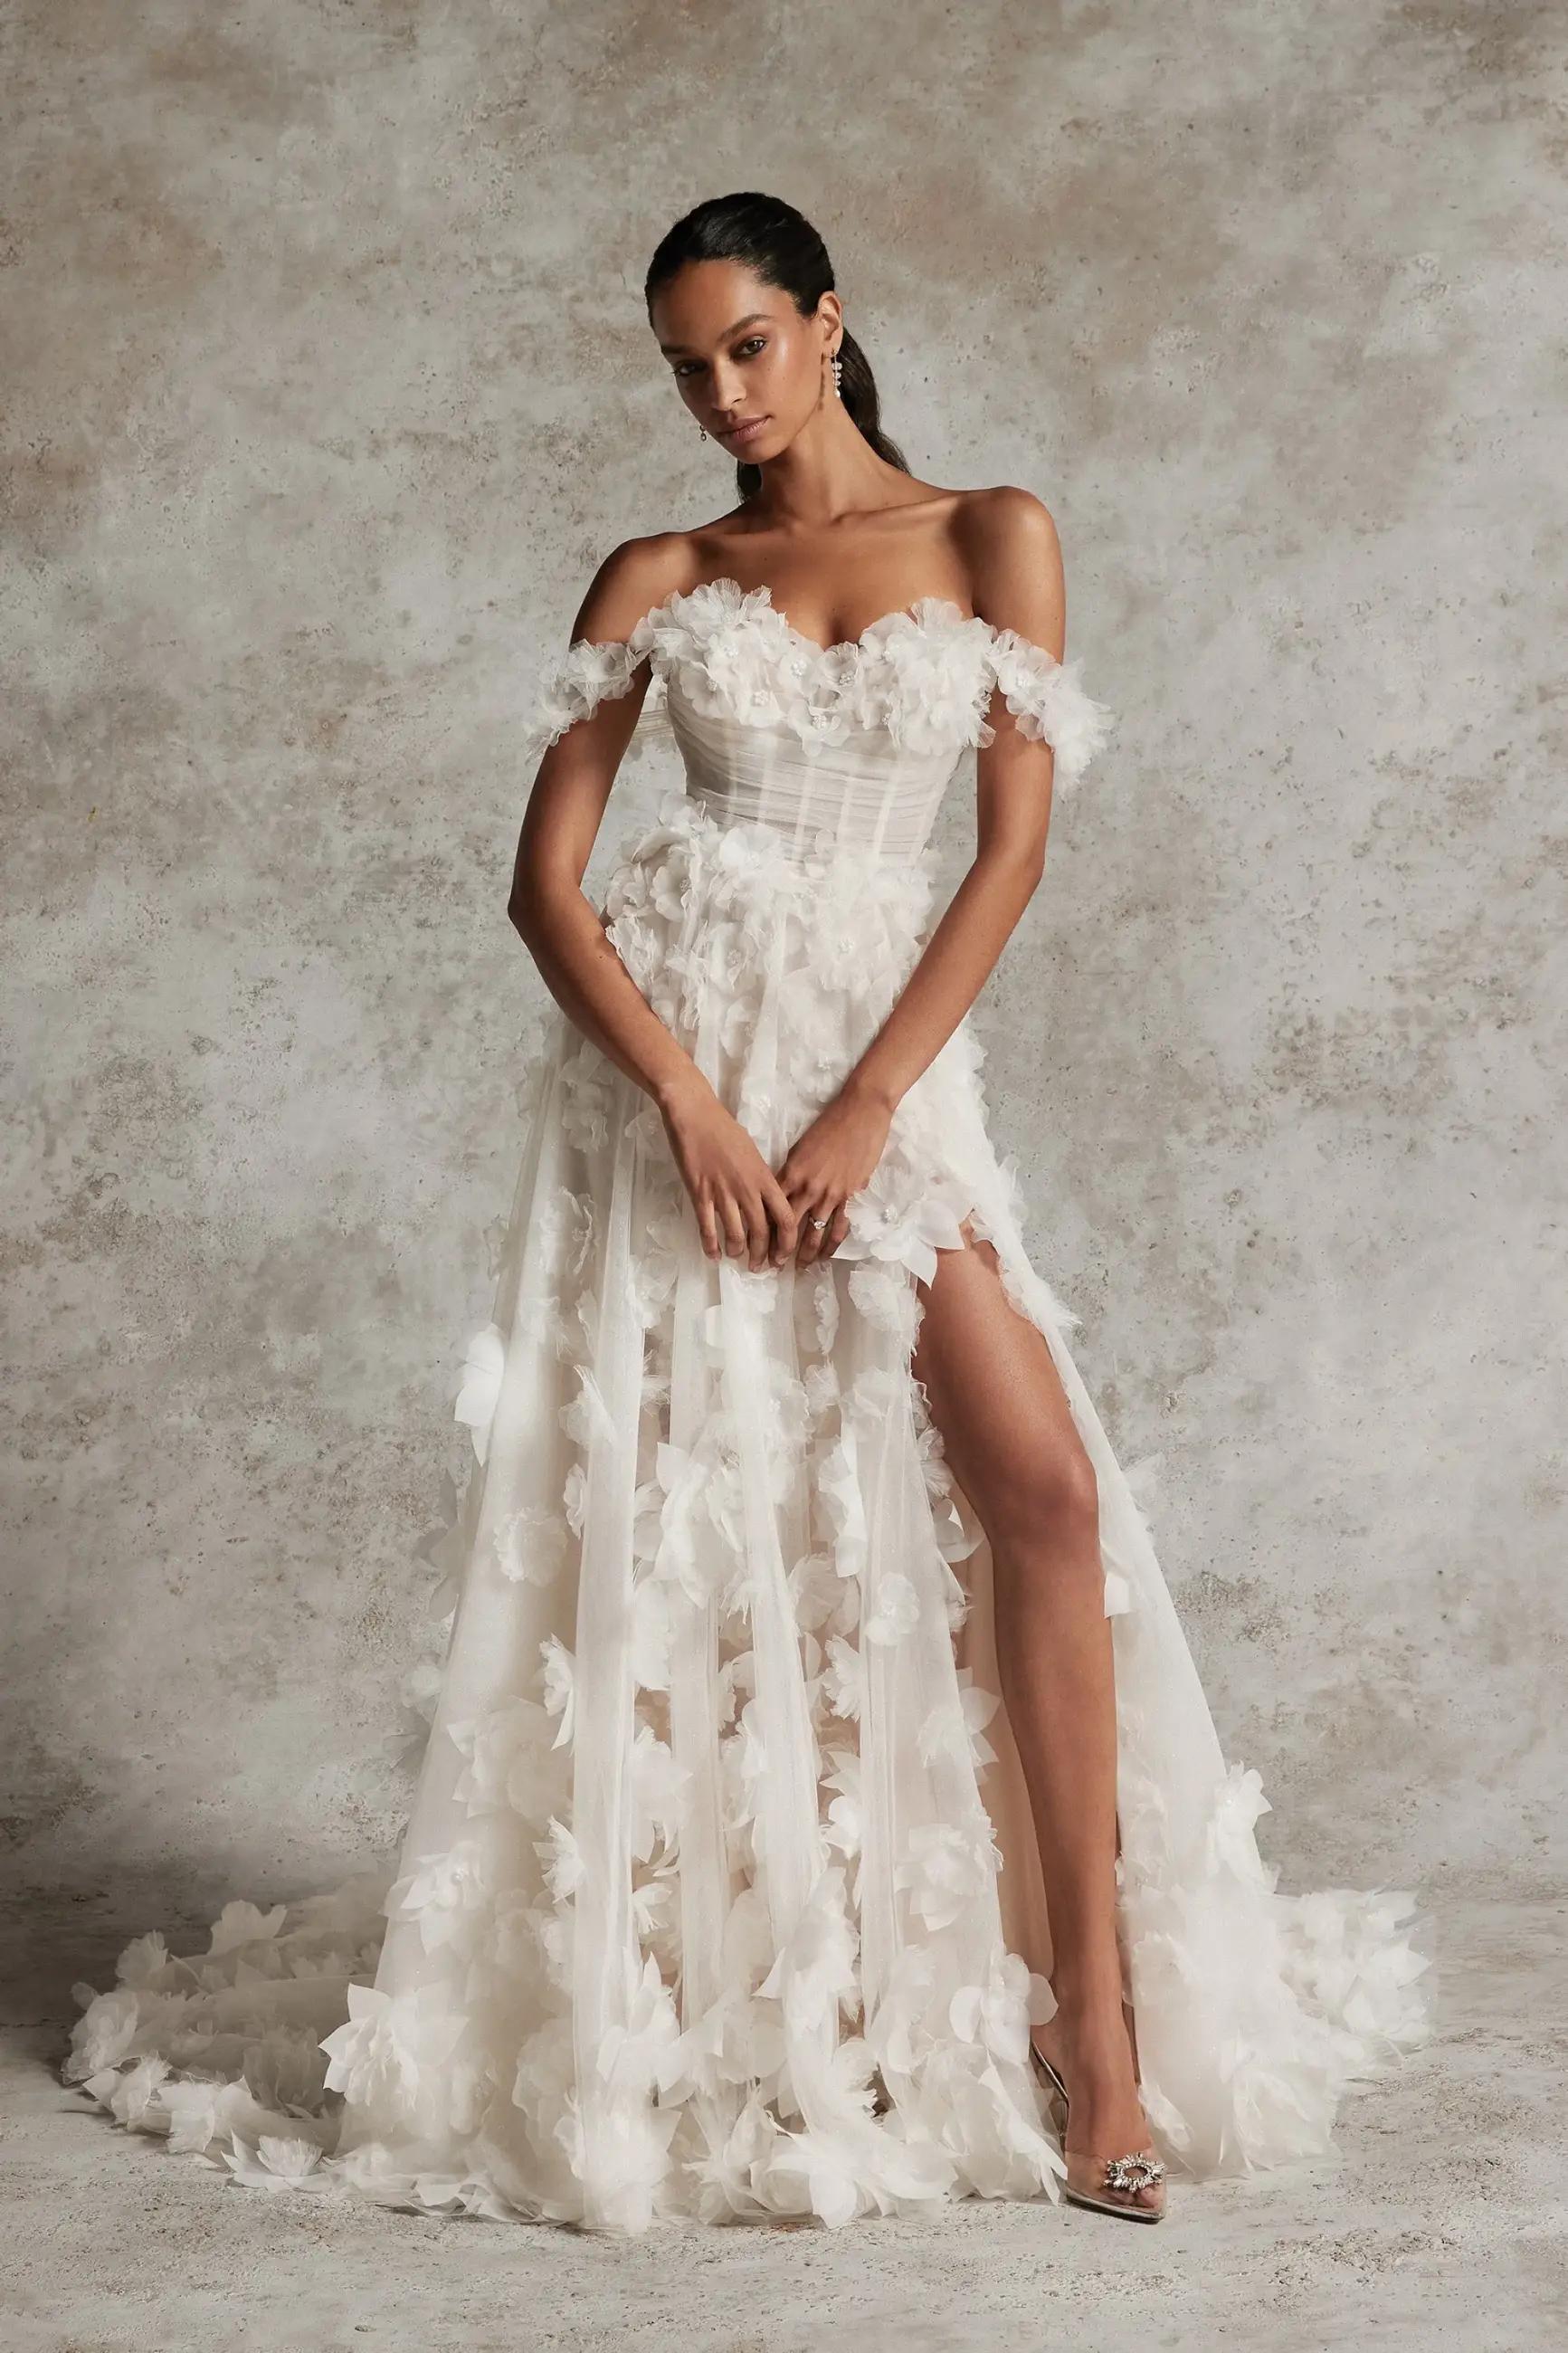 Unique Wedding Dress Ideas for Non-Traditional Brides Image